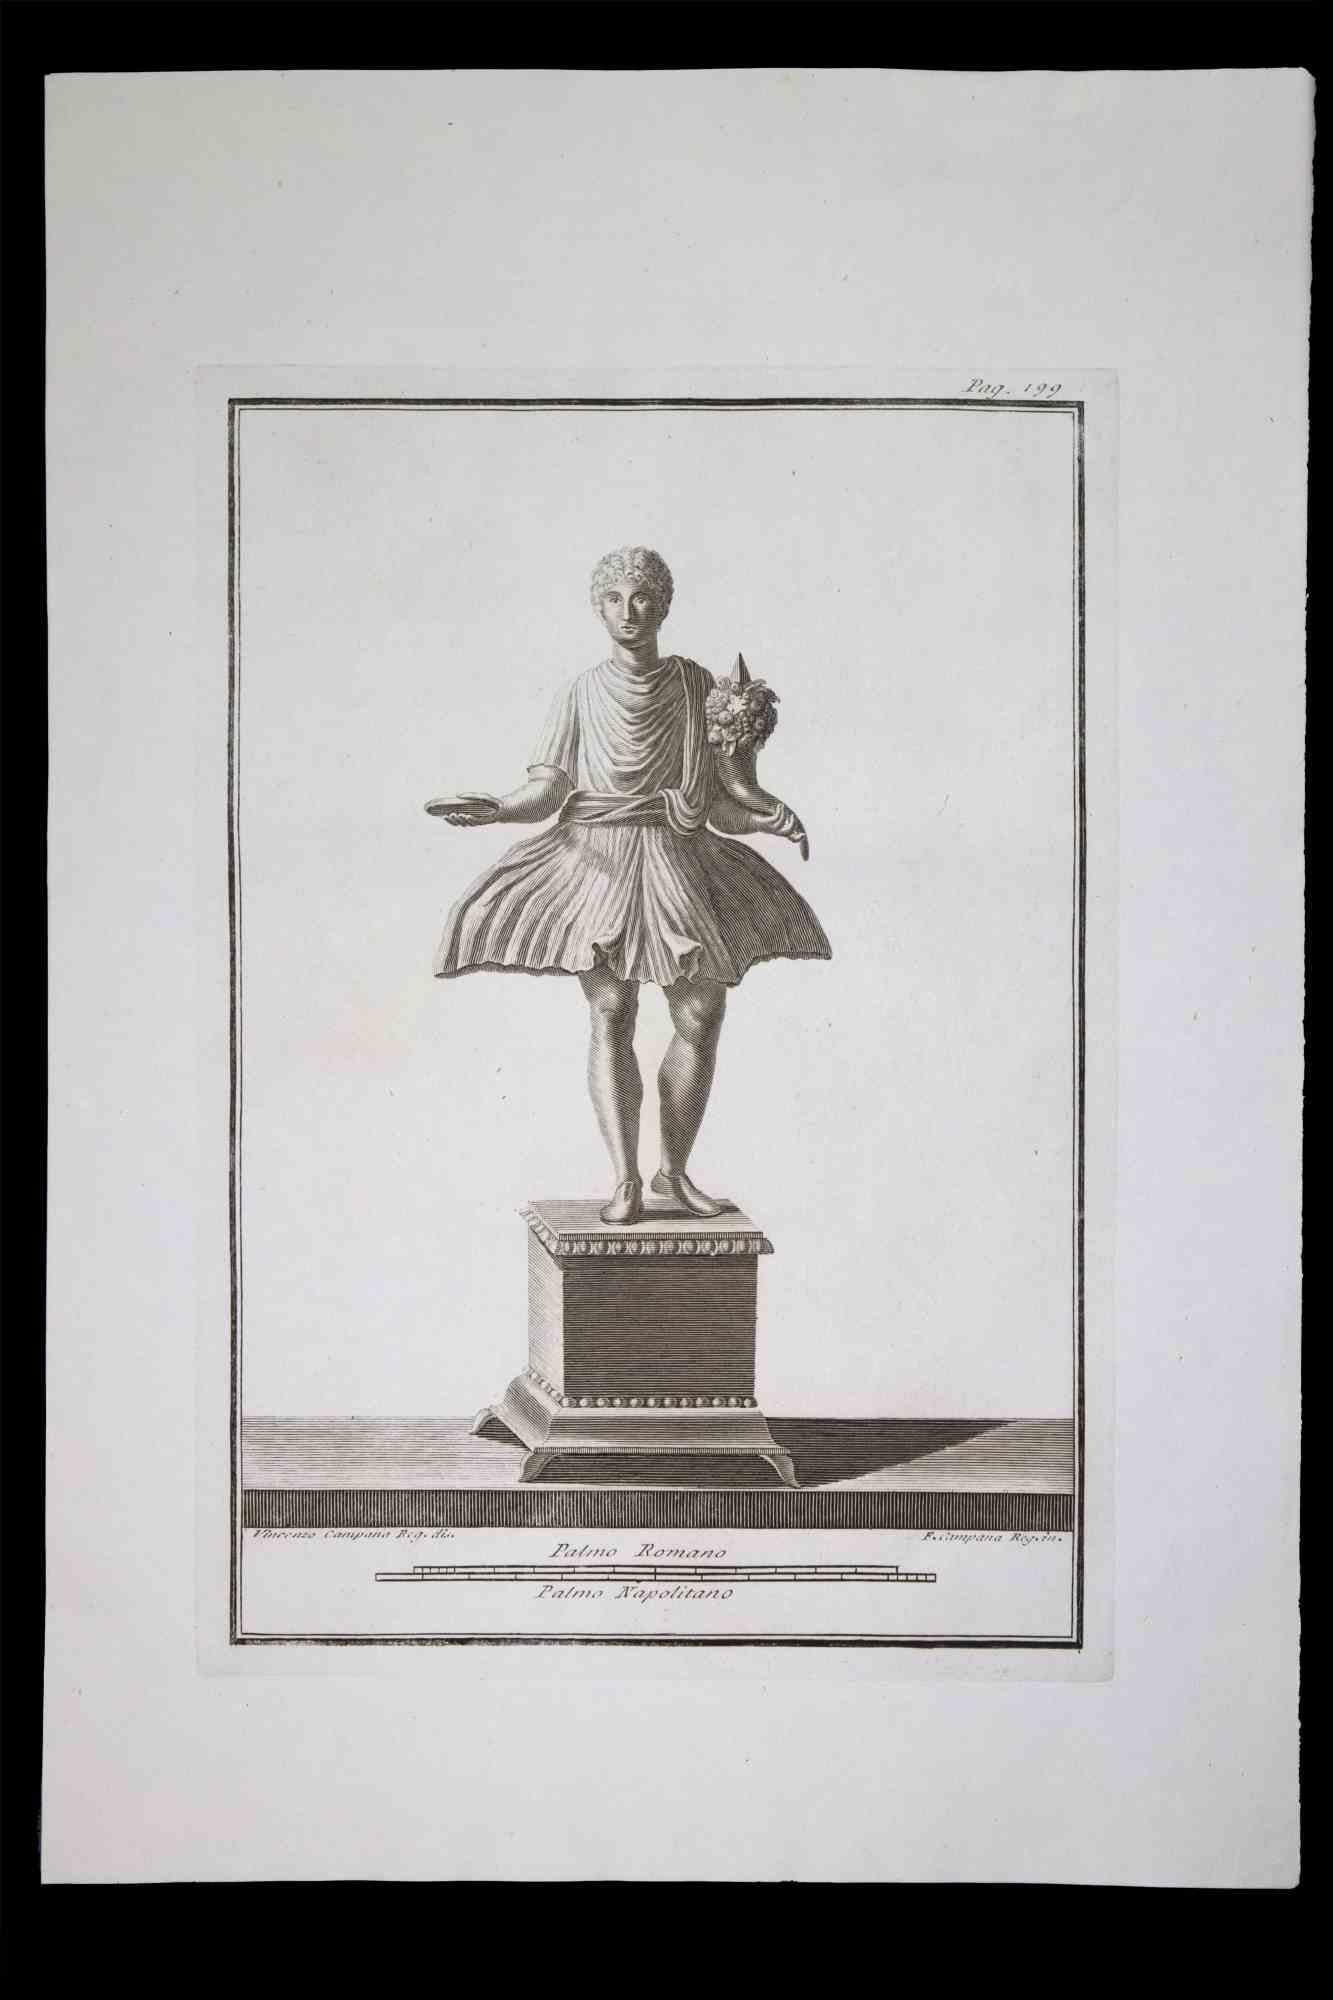 Pietro Campana Figurative Print - Offering, Ancient Roman Statue - Etching - 18th century